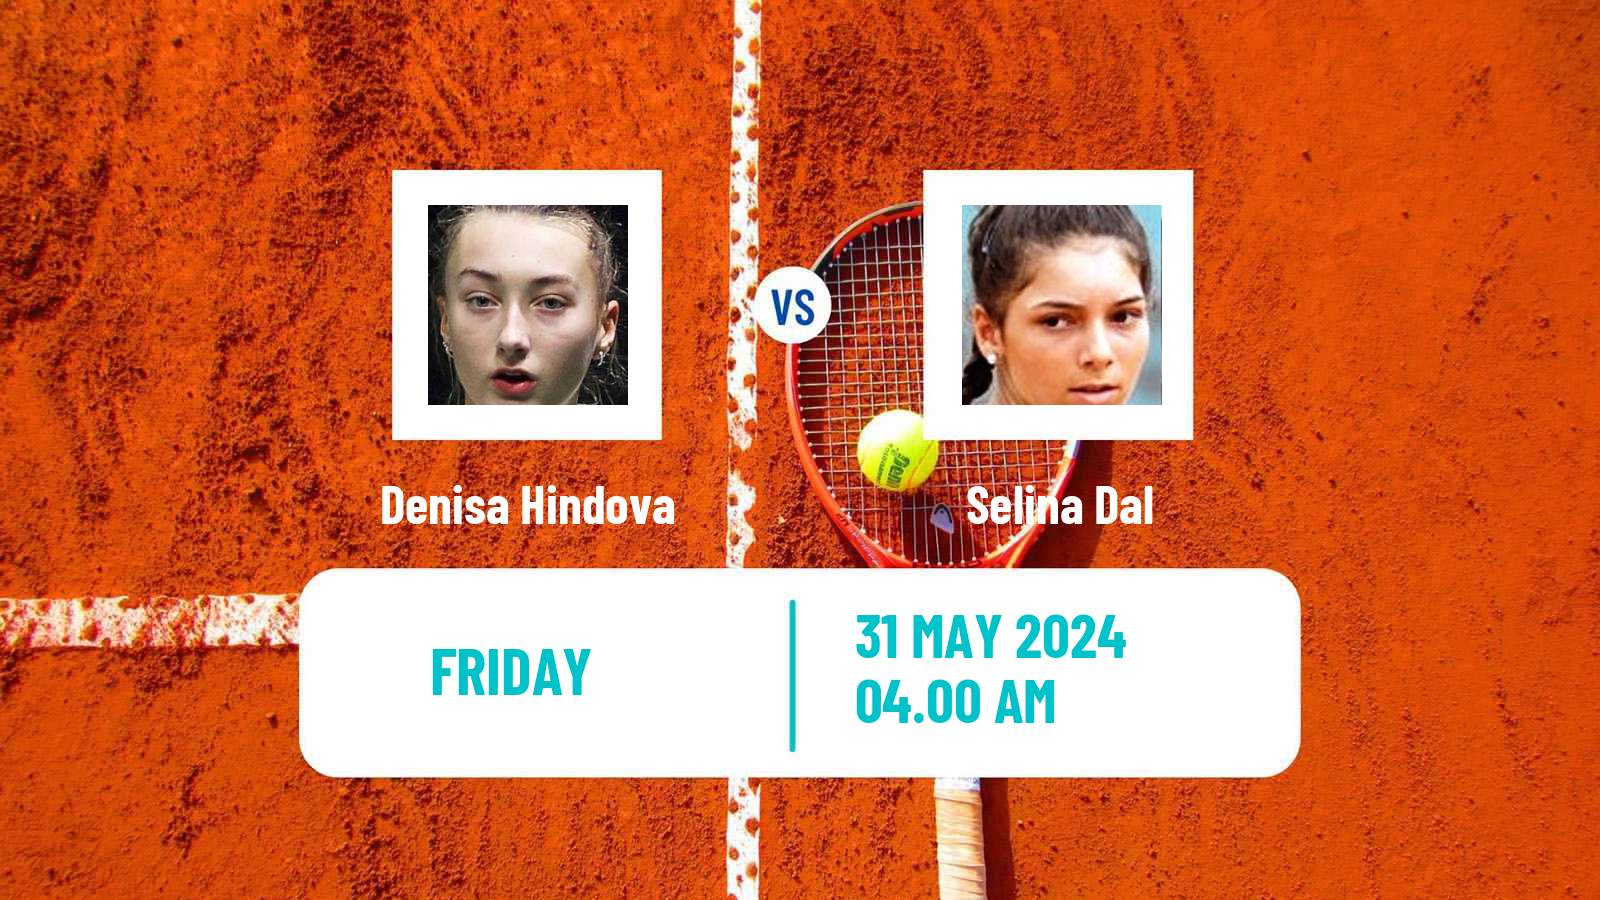 Tennis ITF W15 Bol 2 Women Denisa Hindova - Selina Dal